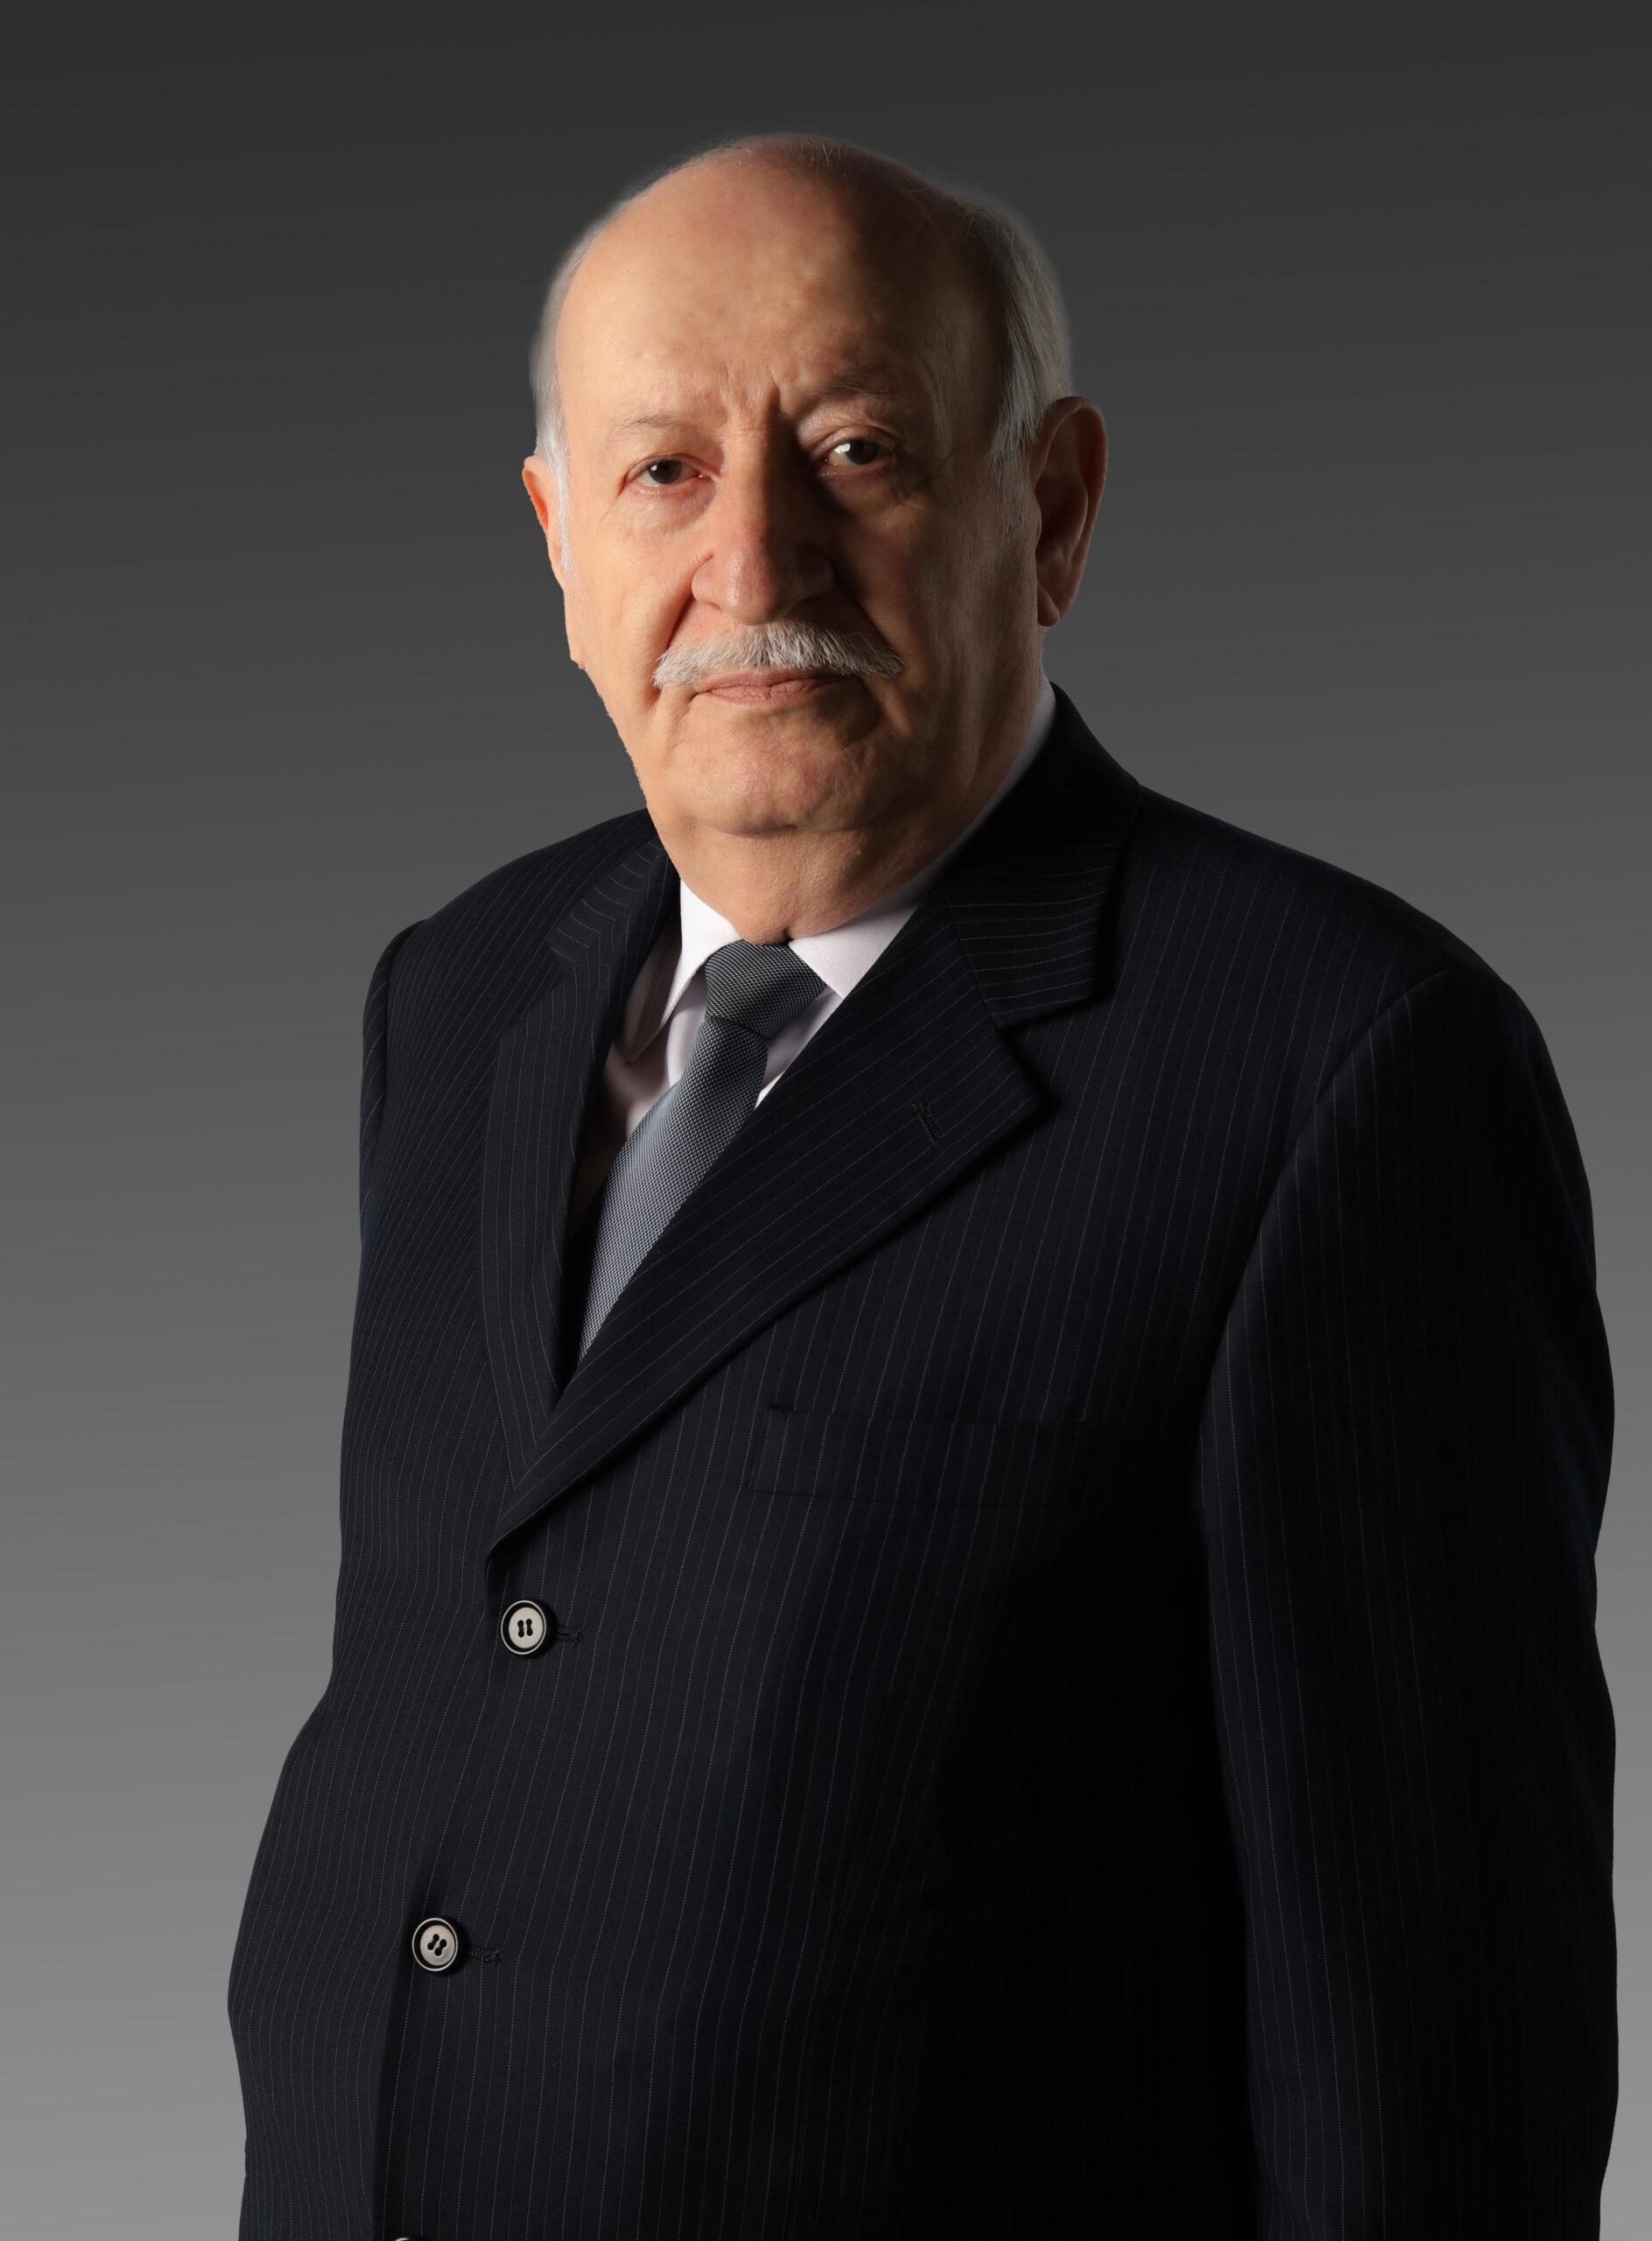 Dr. Kashef Shaban